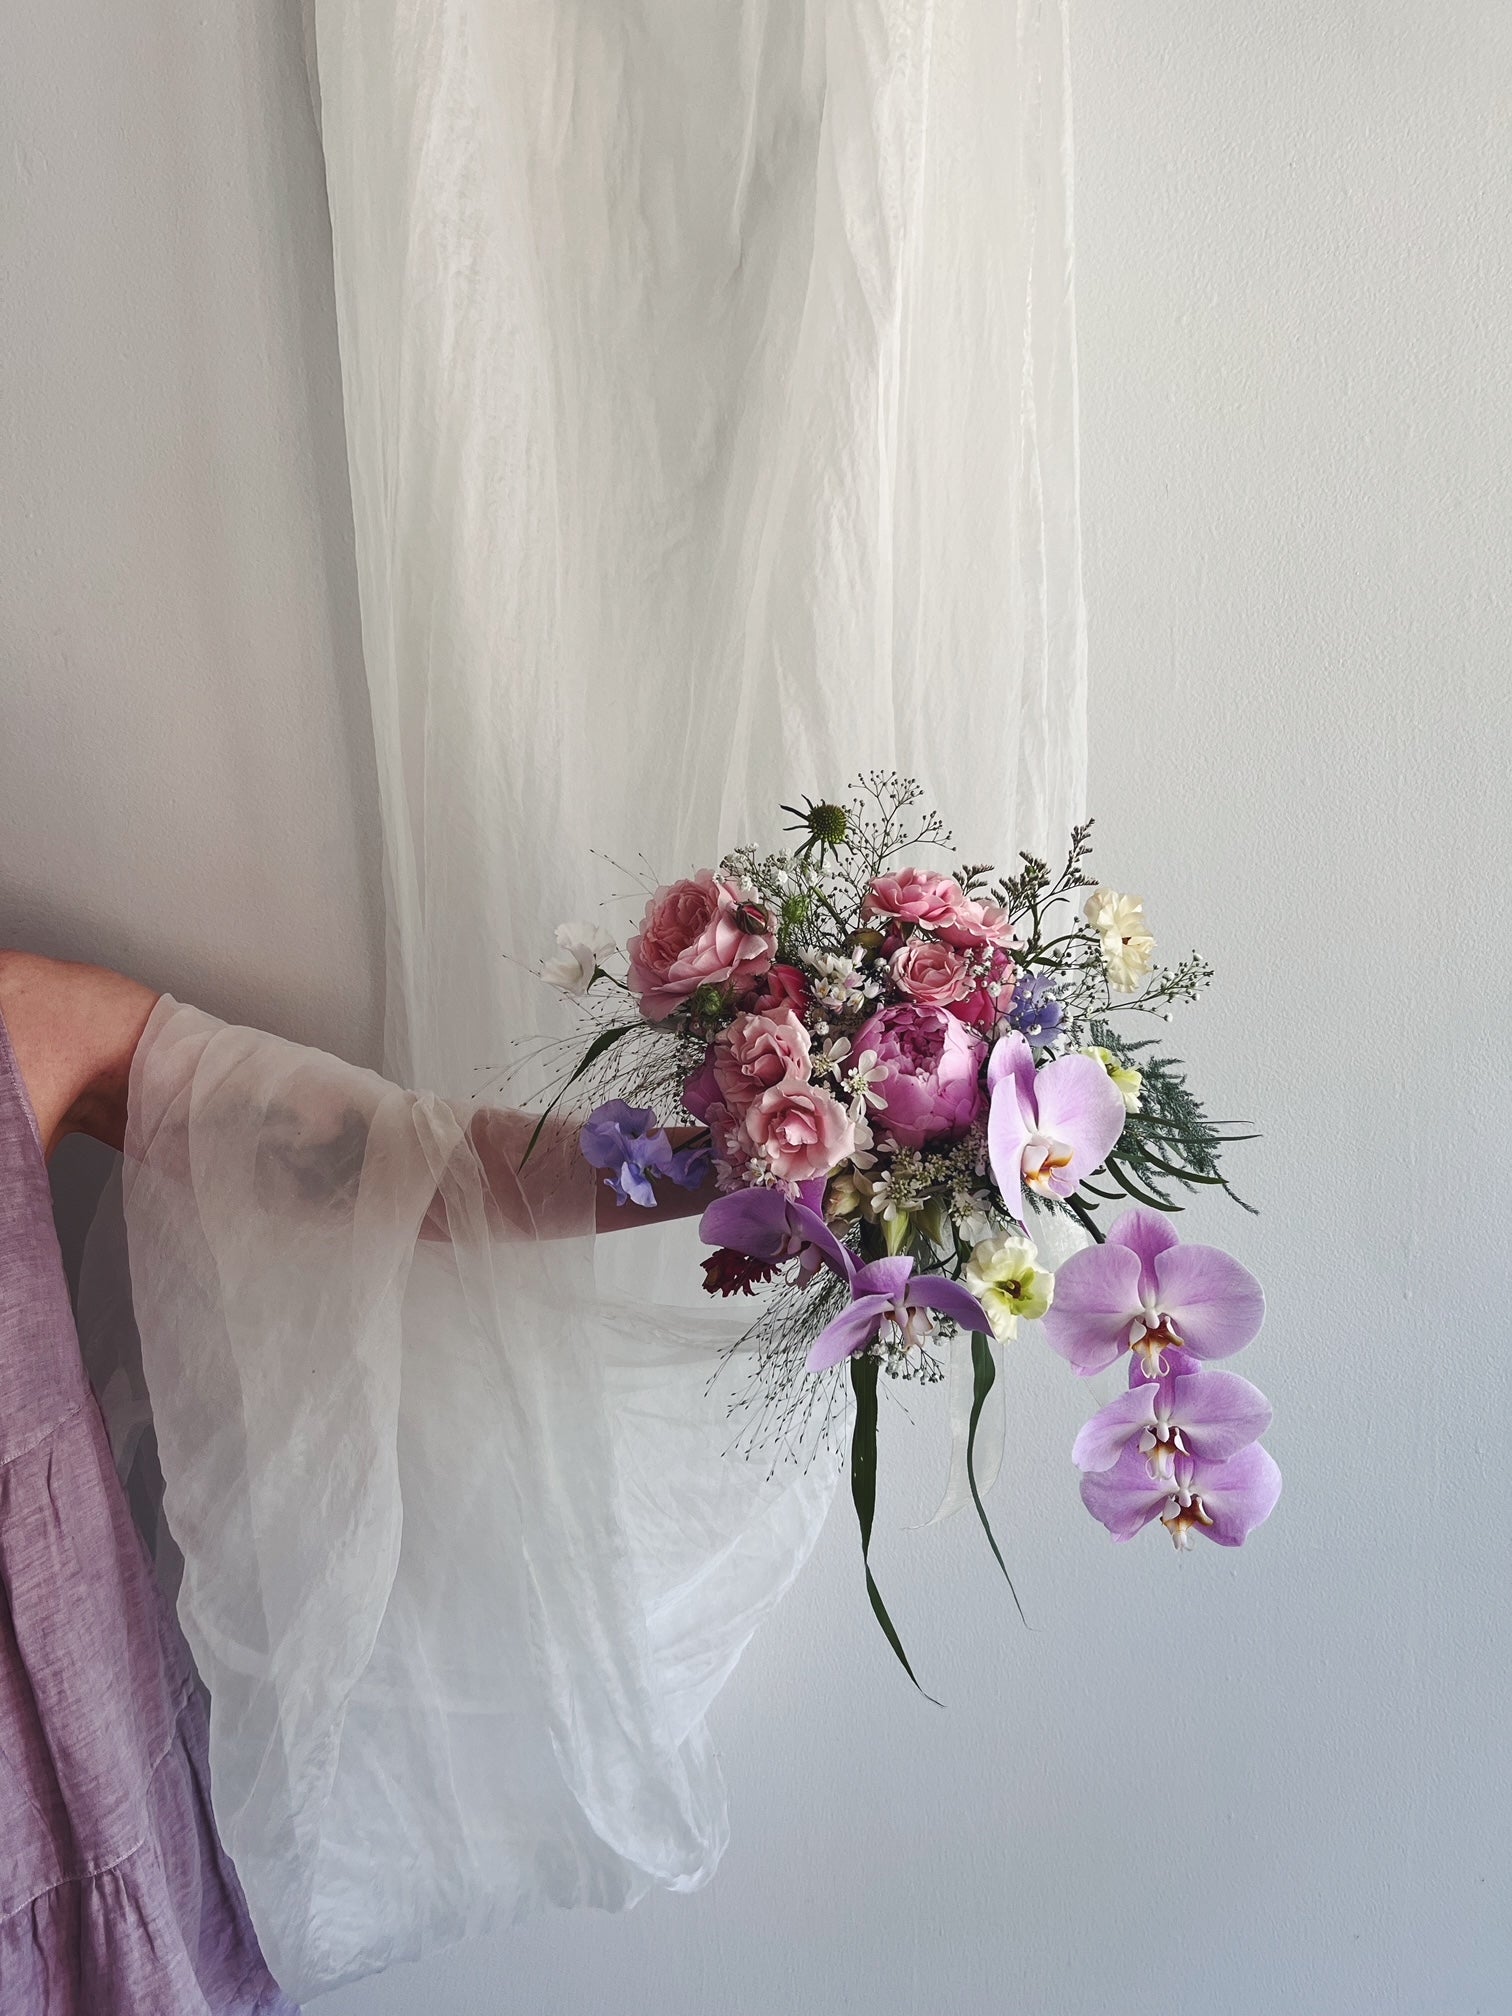 Flower Delivery Vancouver-The Wild Bunch Bridal Bouquet-Wedding Flowers-Florist-The Wild Bunch Flower Shop